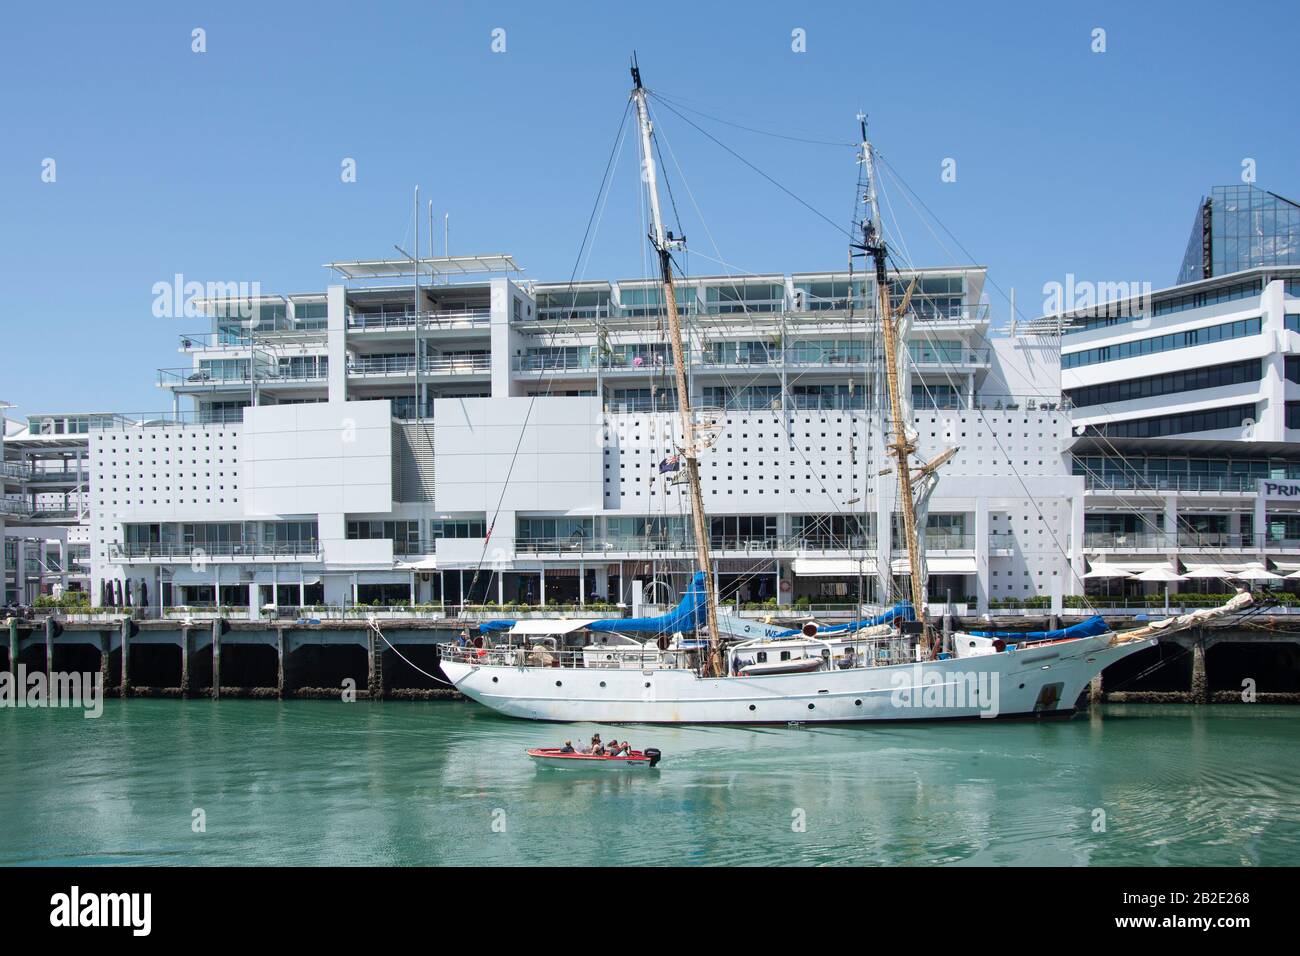 SSV Robert C. Seamans sailing brigantine ship moored at Princes Wharf, Auckland Waterfront, Auckland, Auckland Region, New Zealand Stock Photo